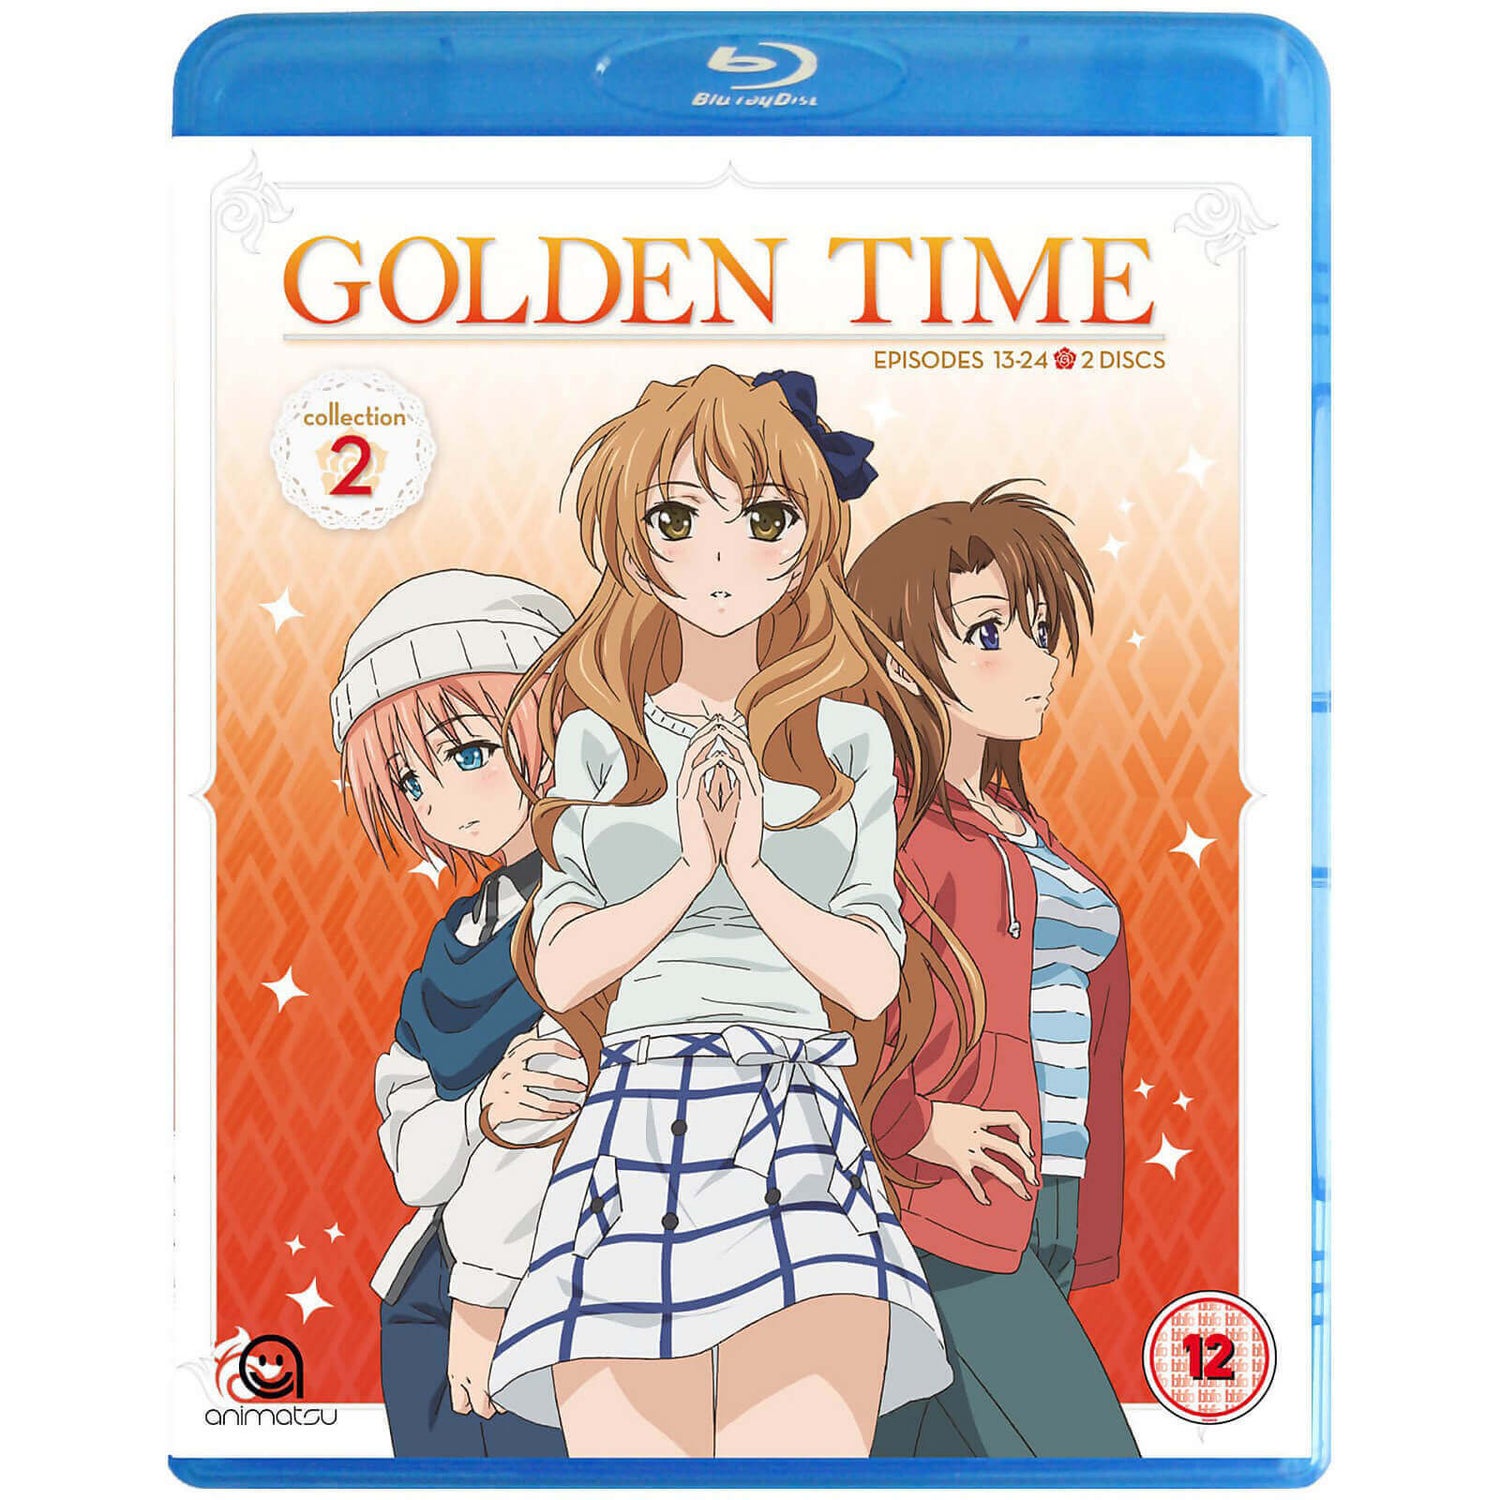 Golden Time: Collection 2 (Episodes 13-24)